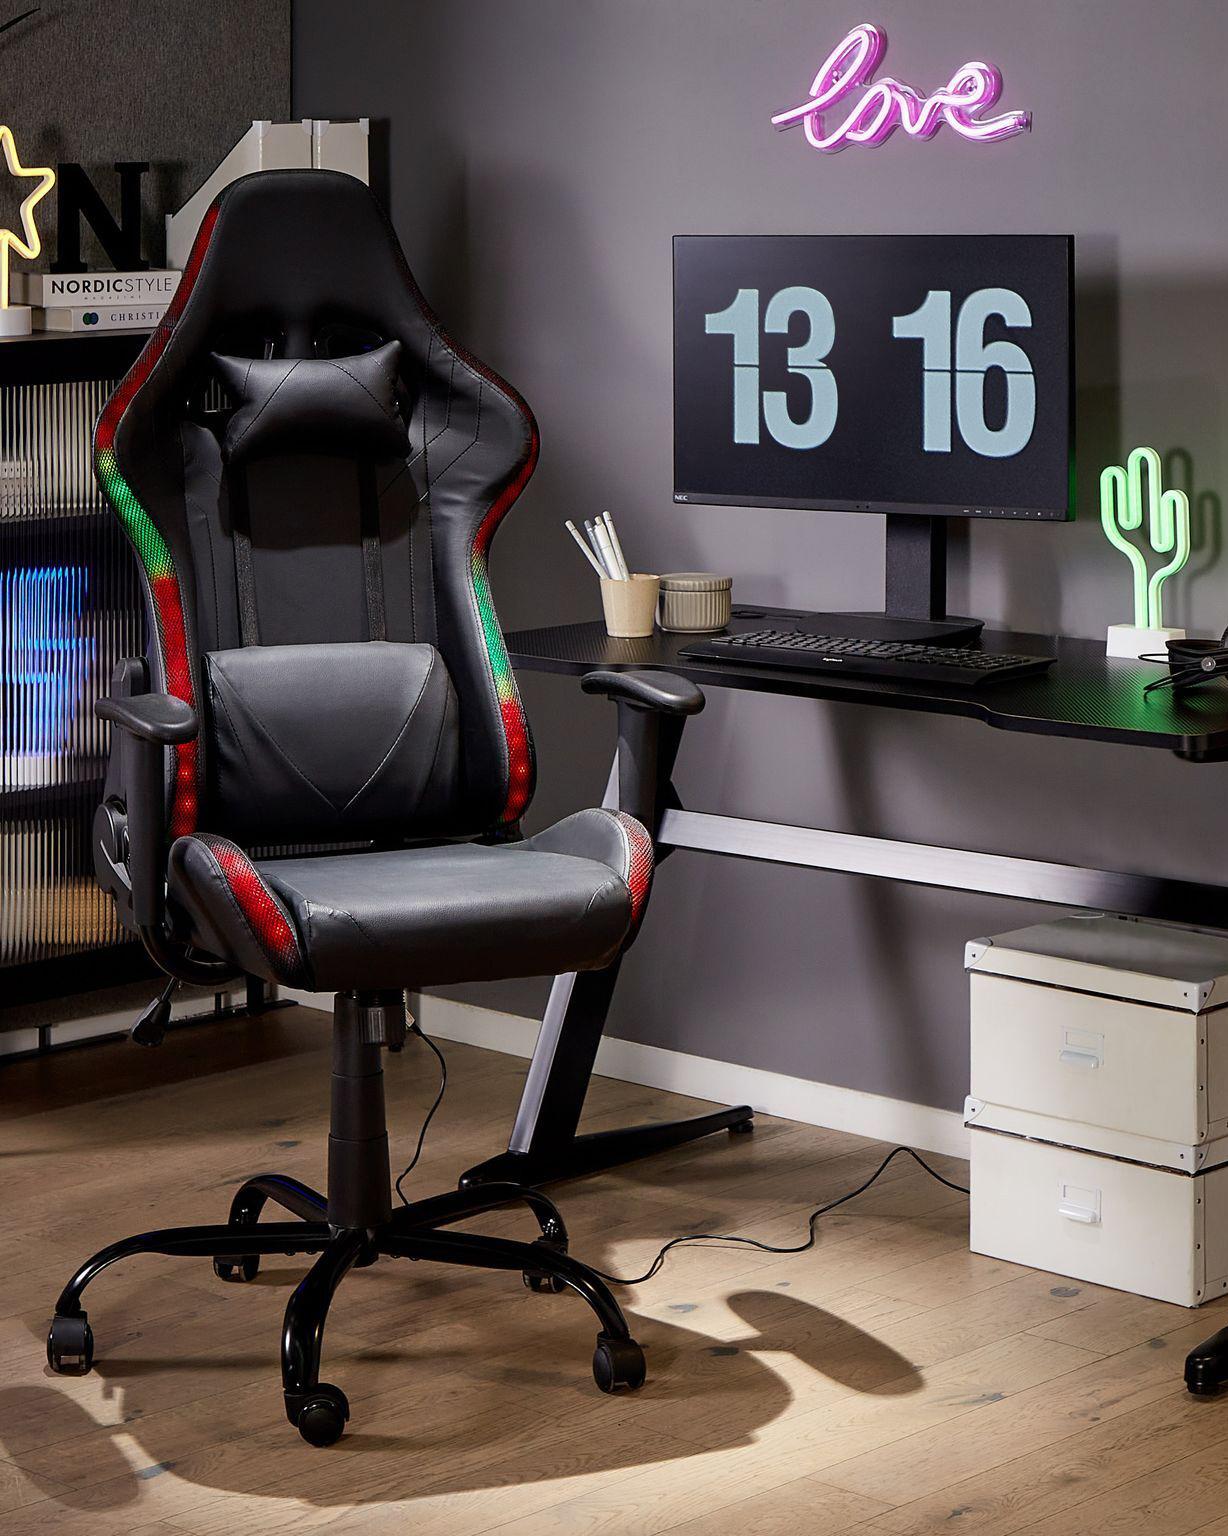 Fekete gamer szék LED világítással GLEAM_852099